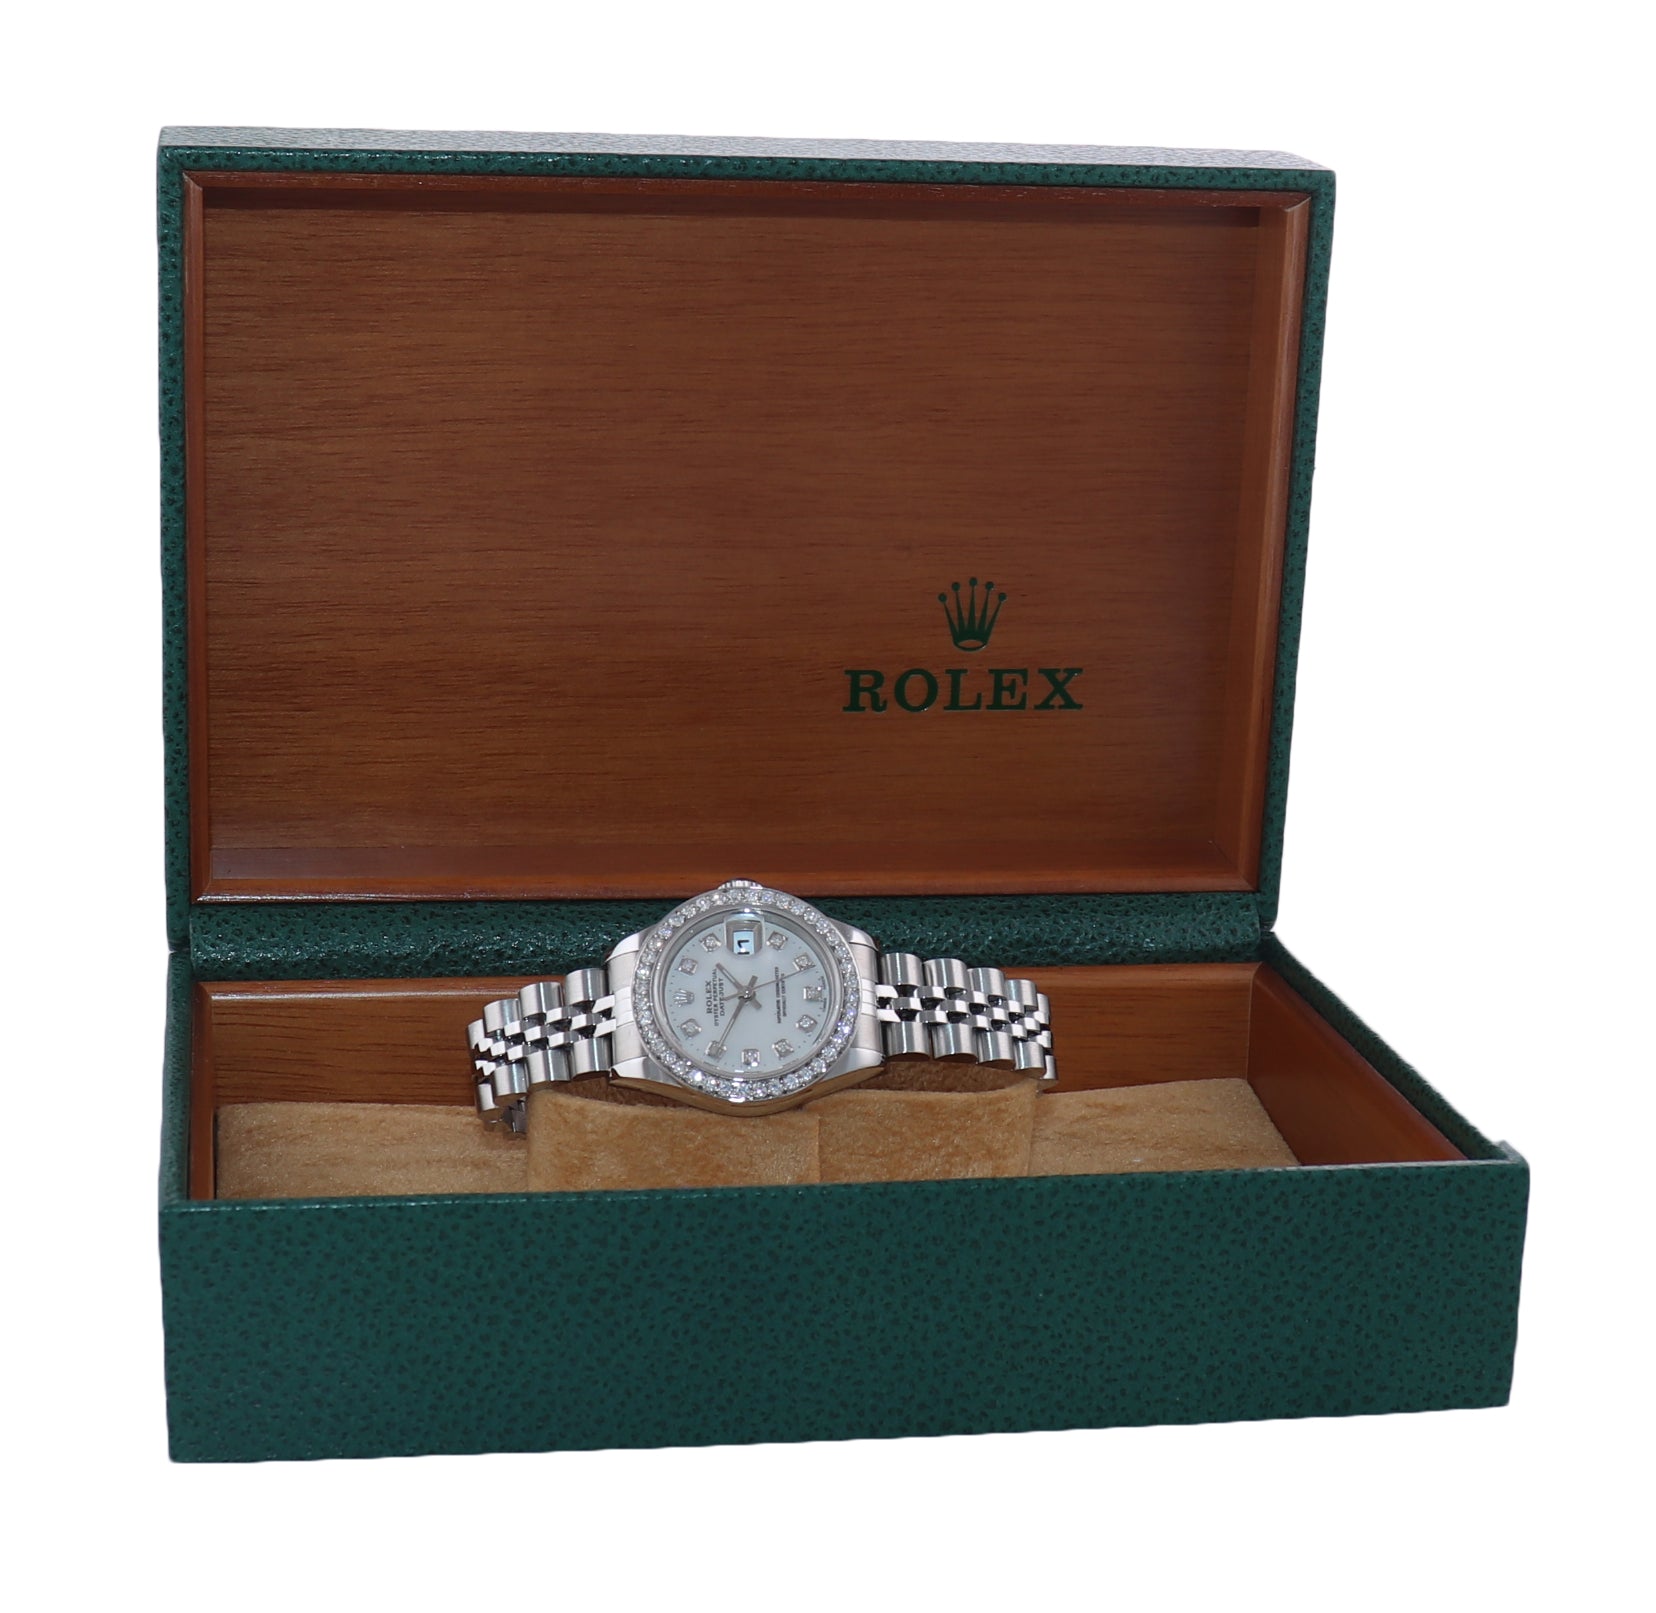 Ladies Rolex DateJust 26mm Stainless Steel MOP Diamond Jubilee Date Watch 79190